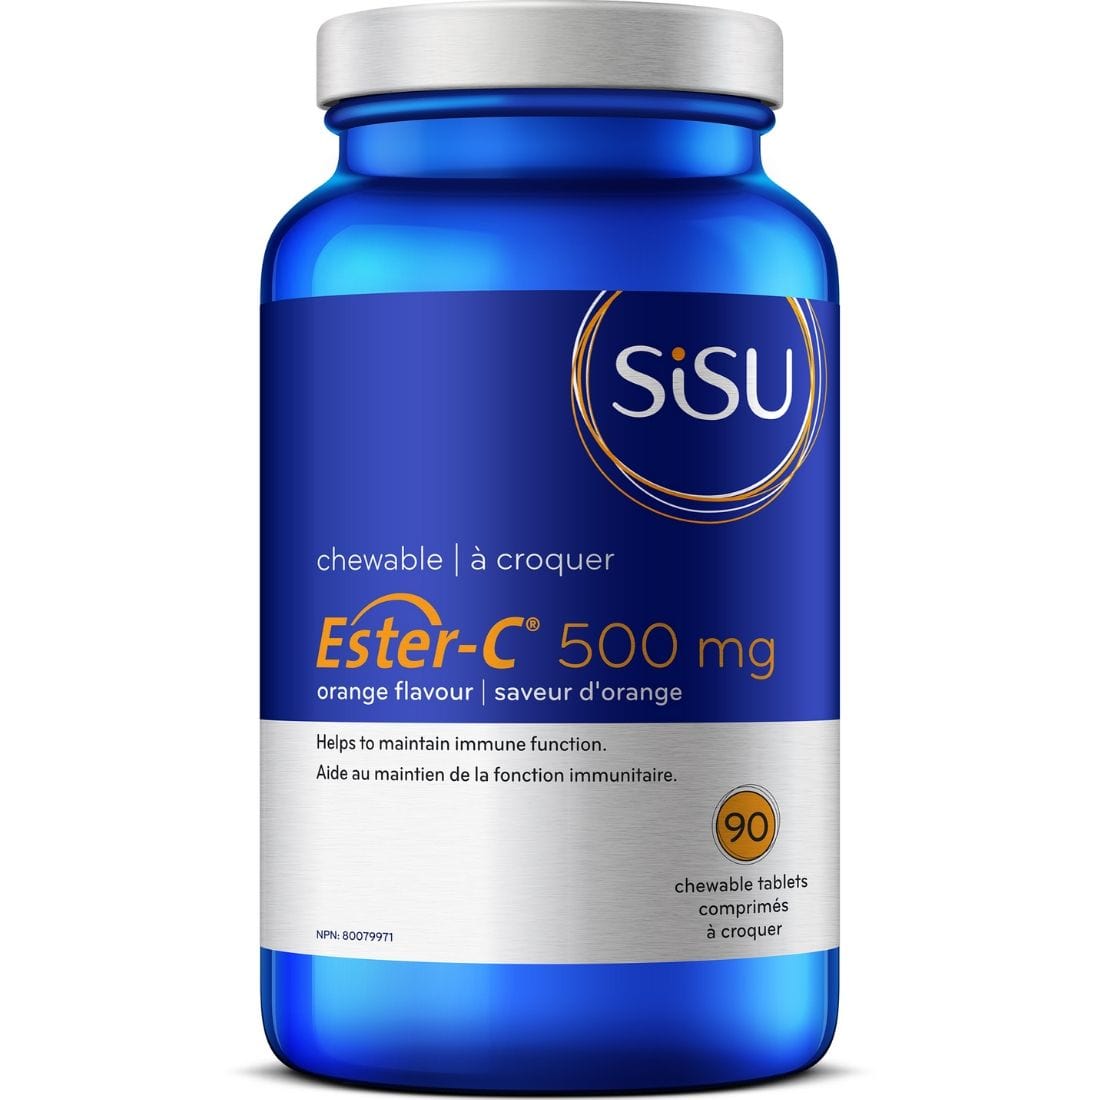 SISU Ester-C 500mg, 90 Chewable Tablets